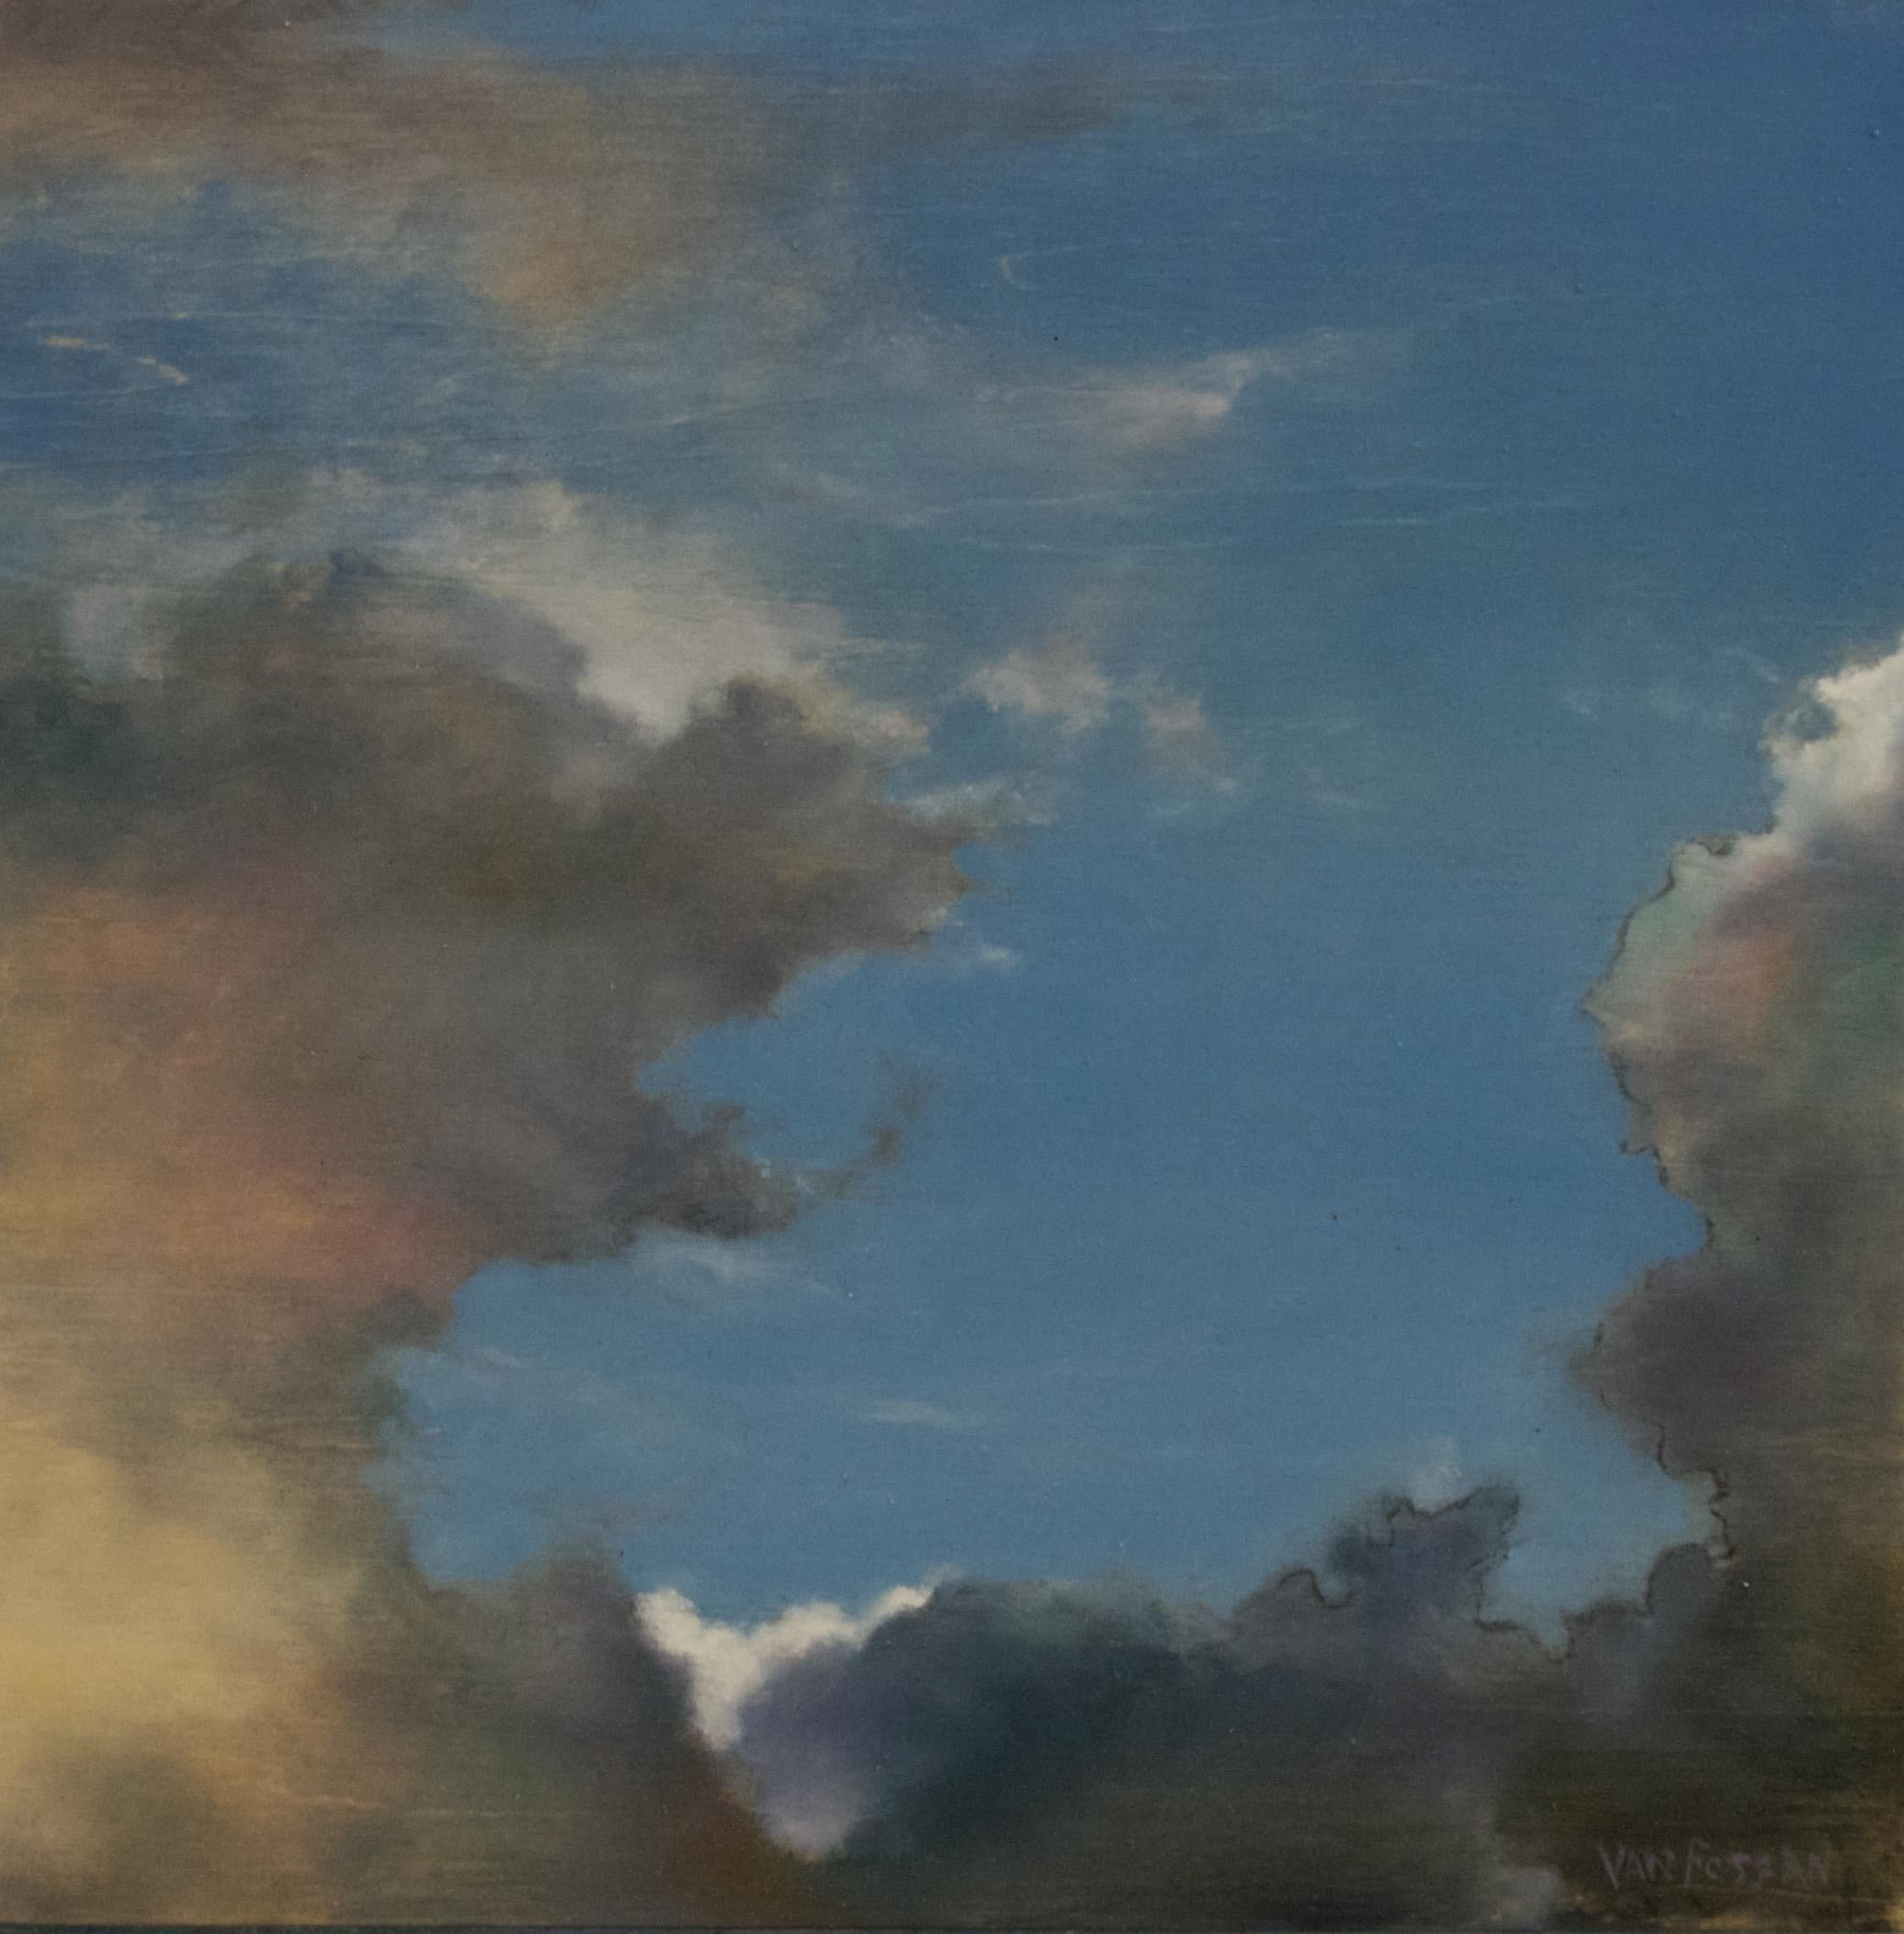 James Van Fossan Figurative Painting - "Sky 61" Oil Painting